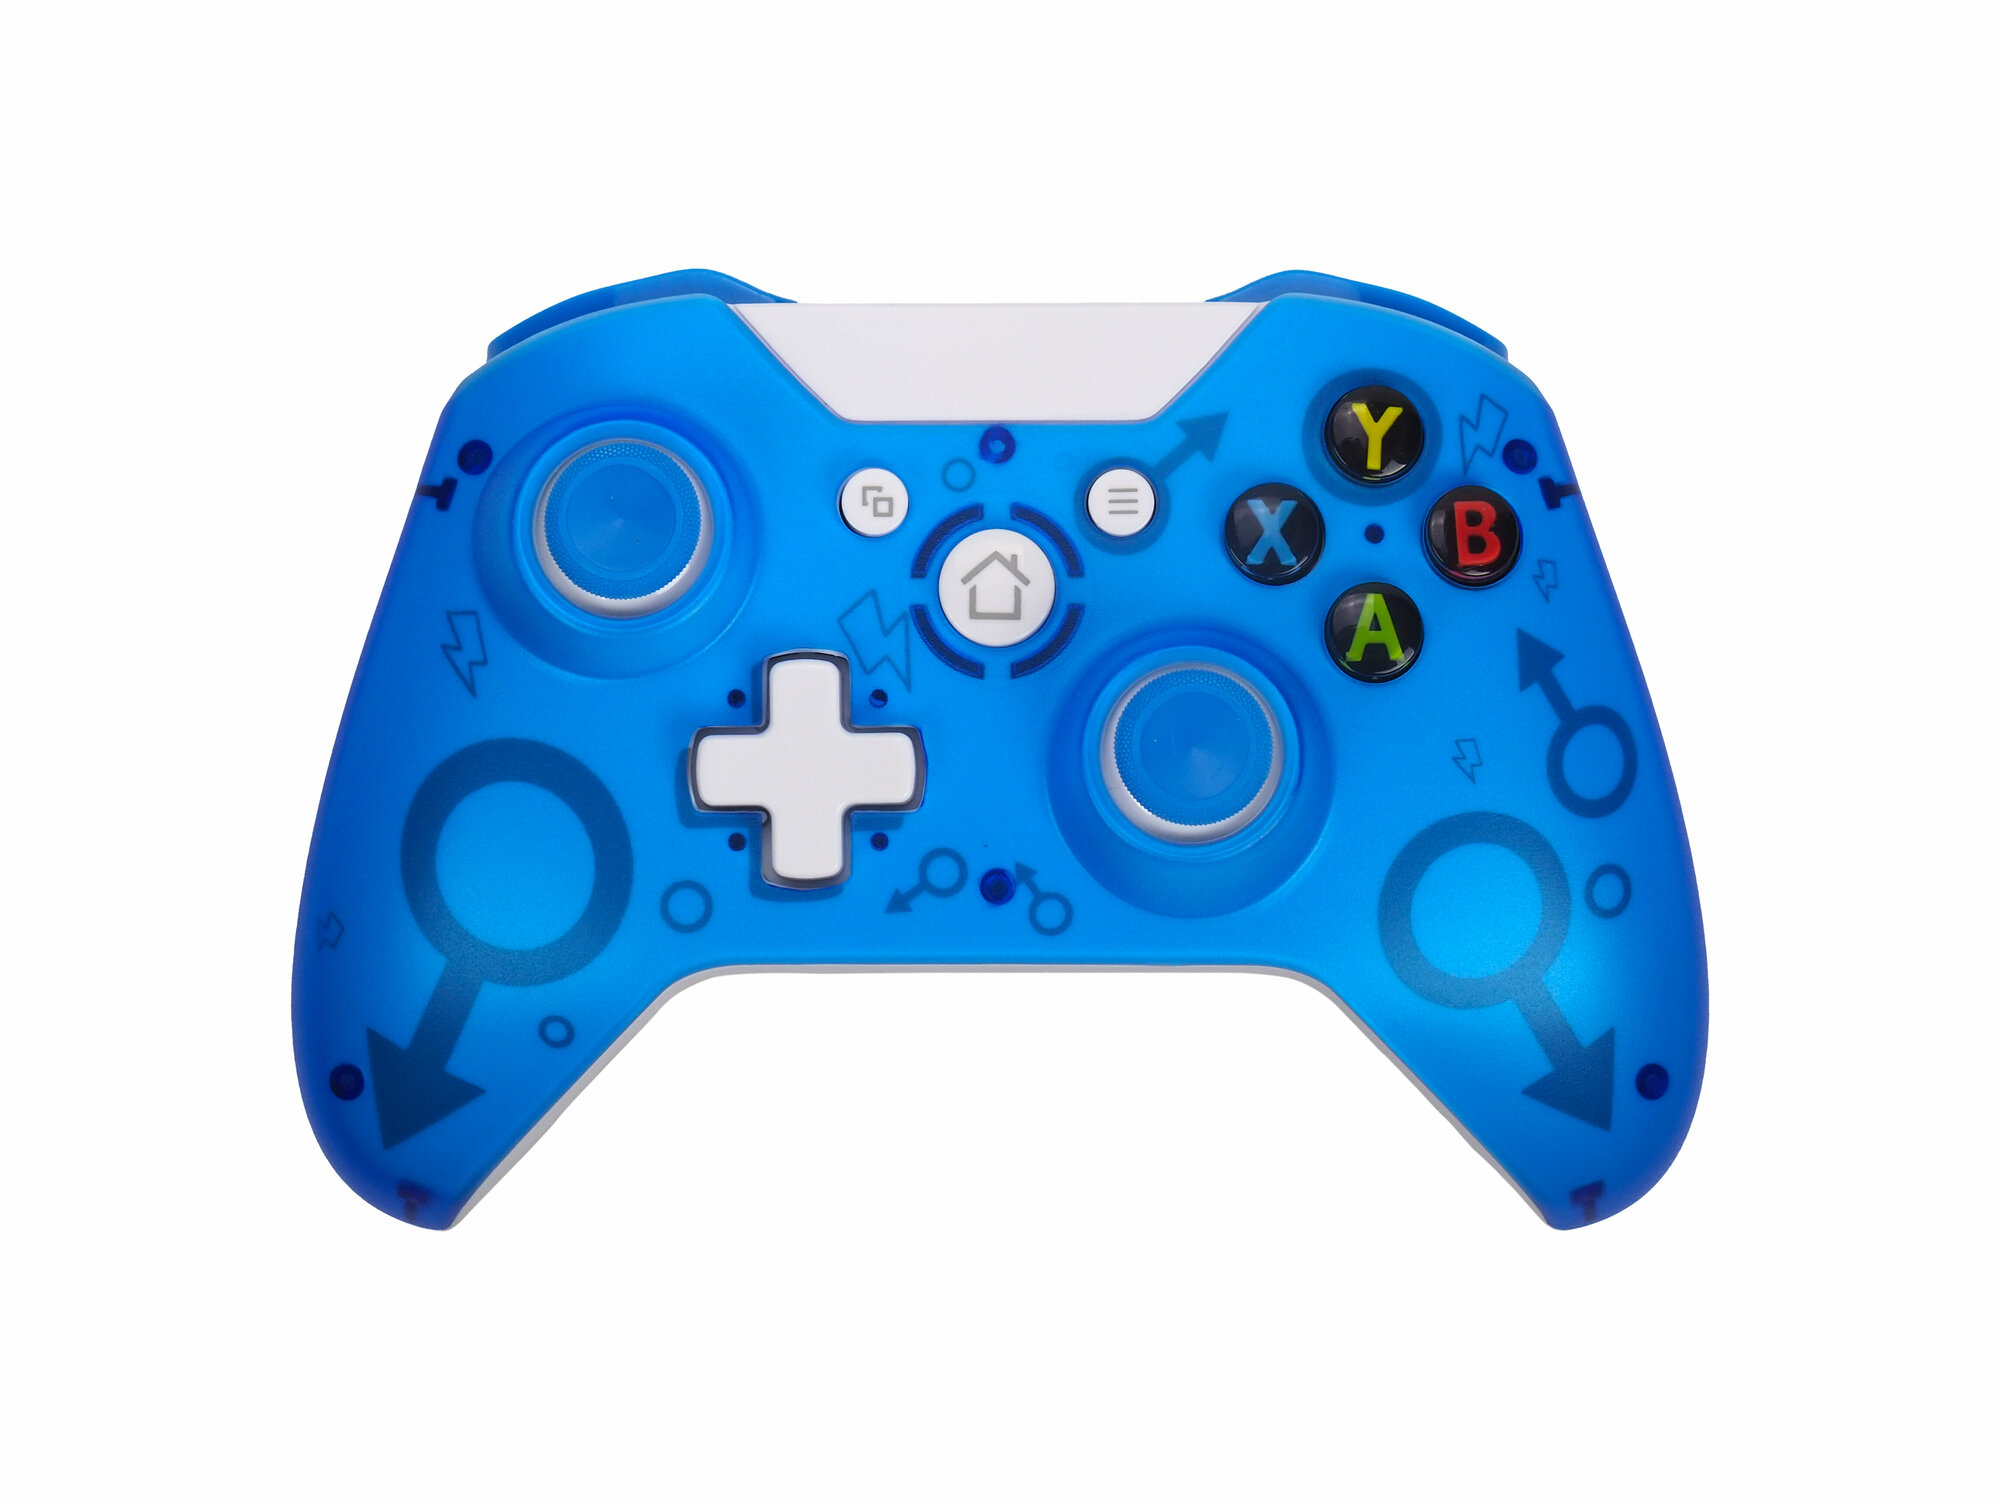 Беспроводной геймпад (джойстик, контроллер) голубой с символом Марса для Xbox One/One S/One X/P3/PC Windows 7/8/10